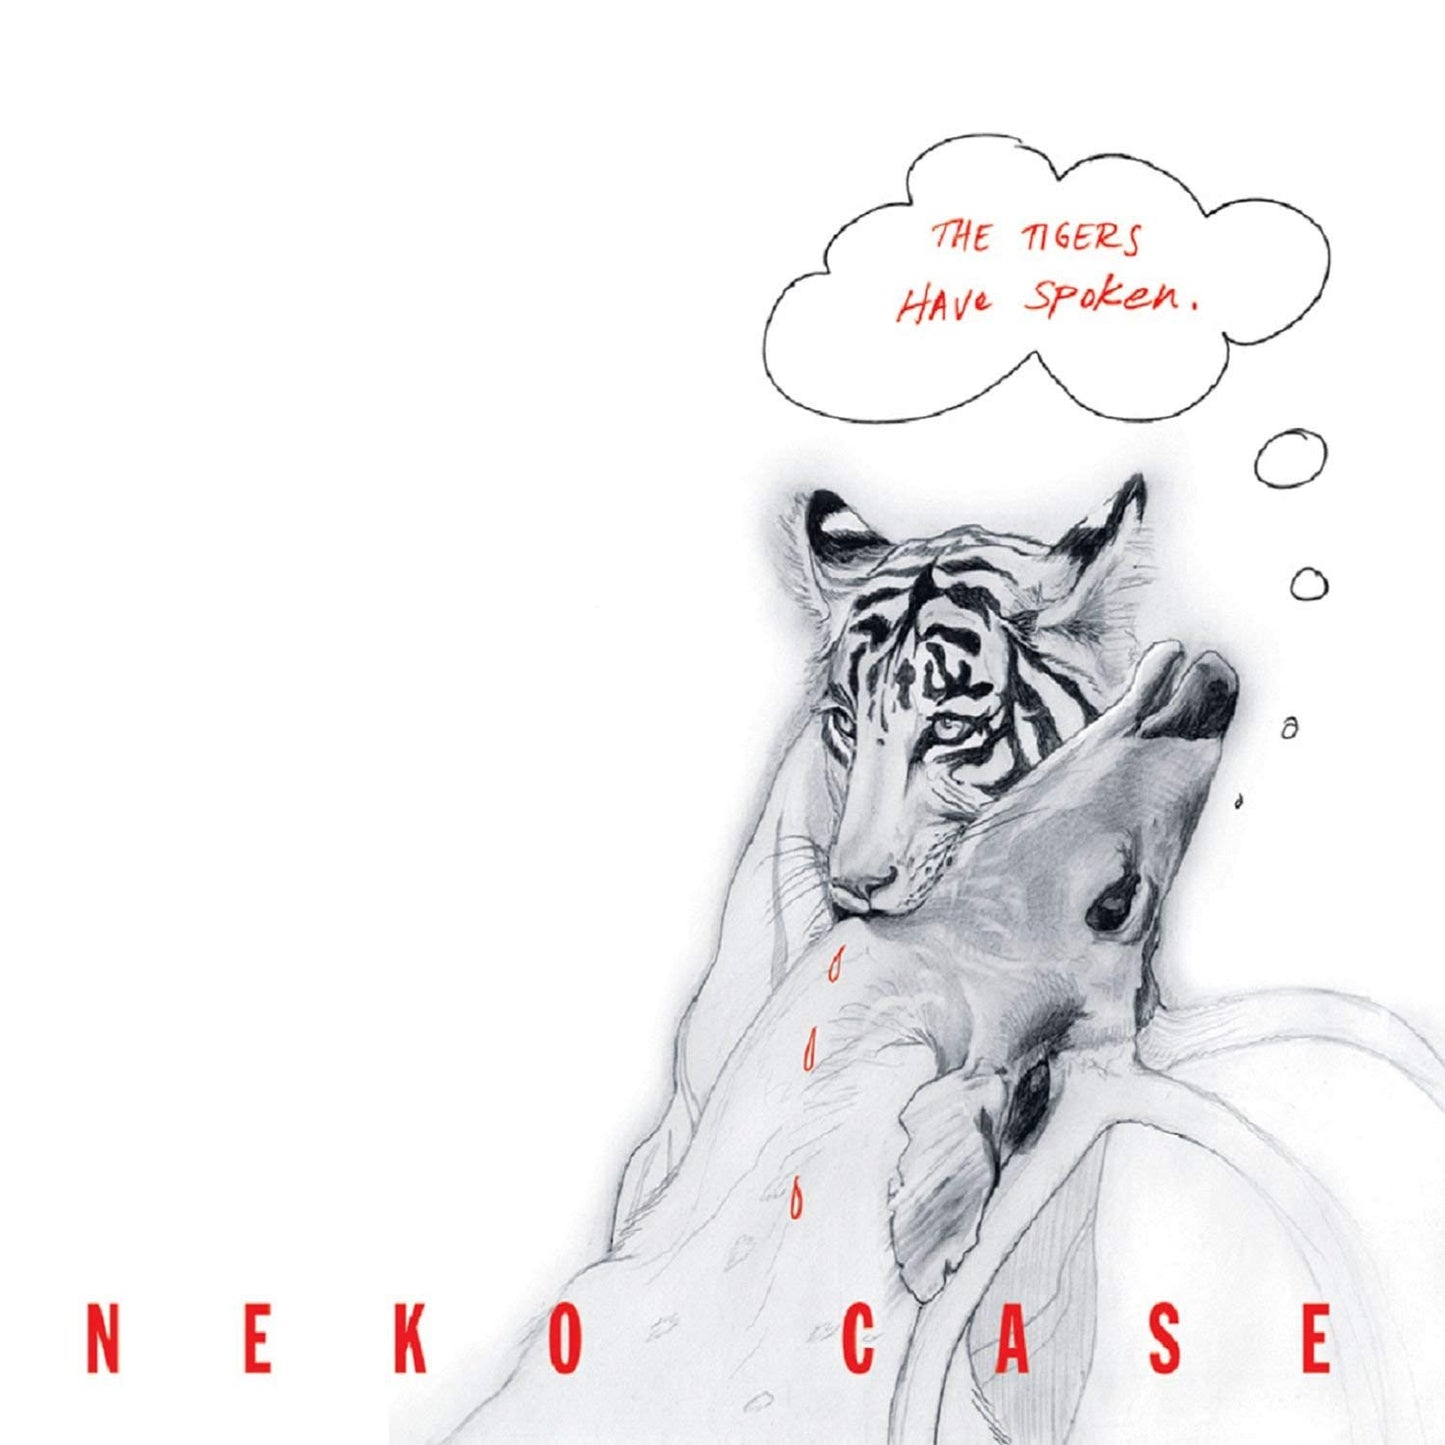 Neko Case - The Tigers Have Spoken - LP